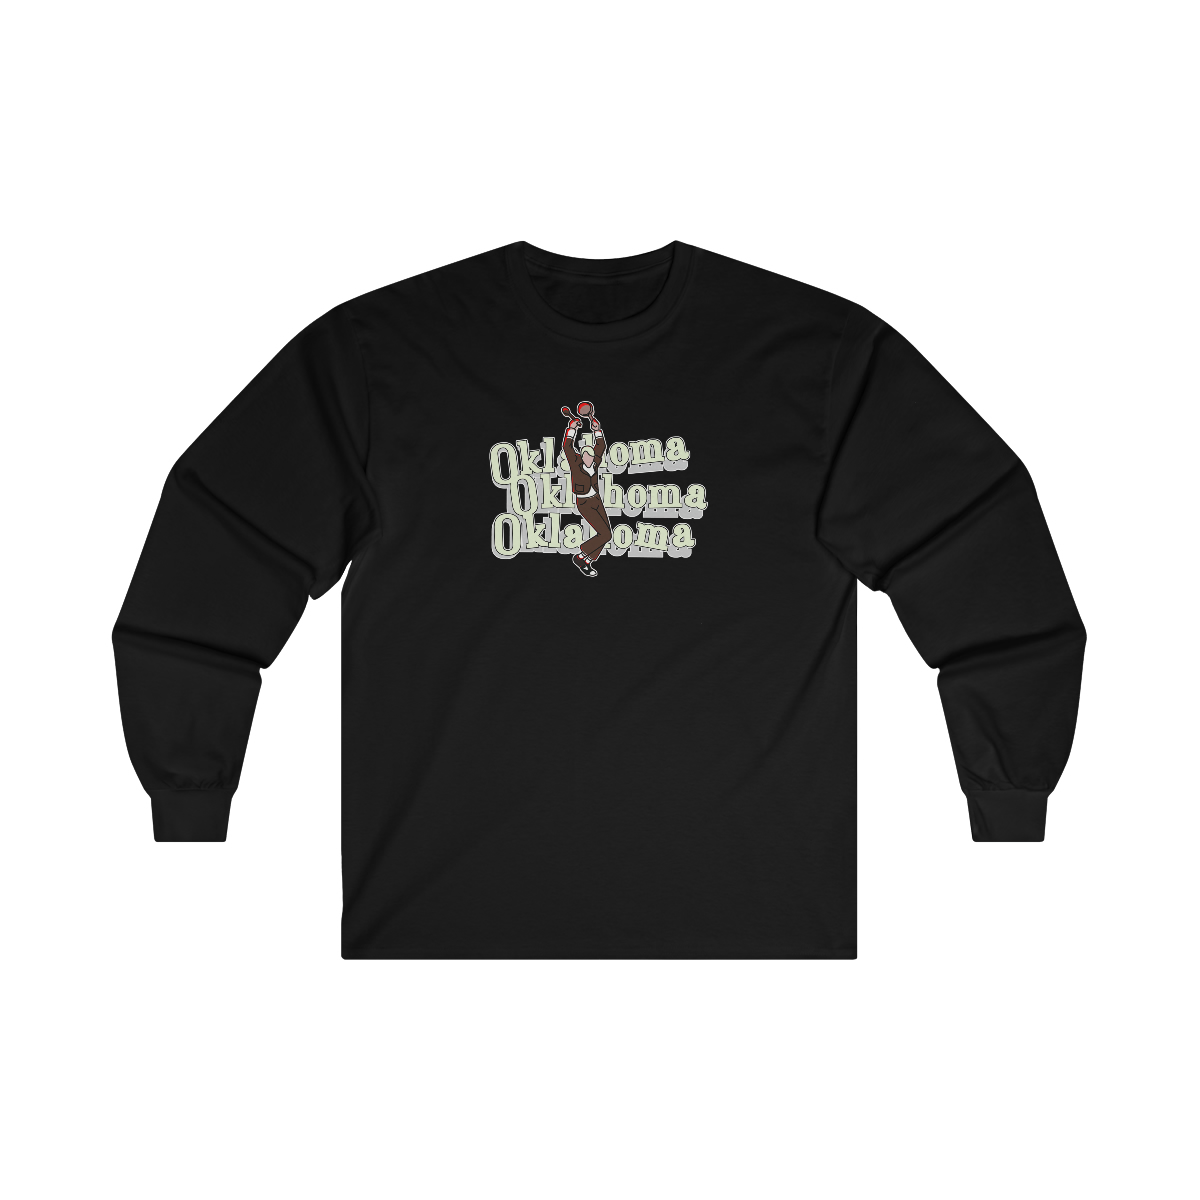 Oklahoma! (dark shirts) - Unisex Ultra Cotton Long Sleeve Tee